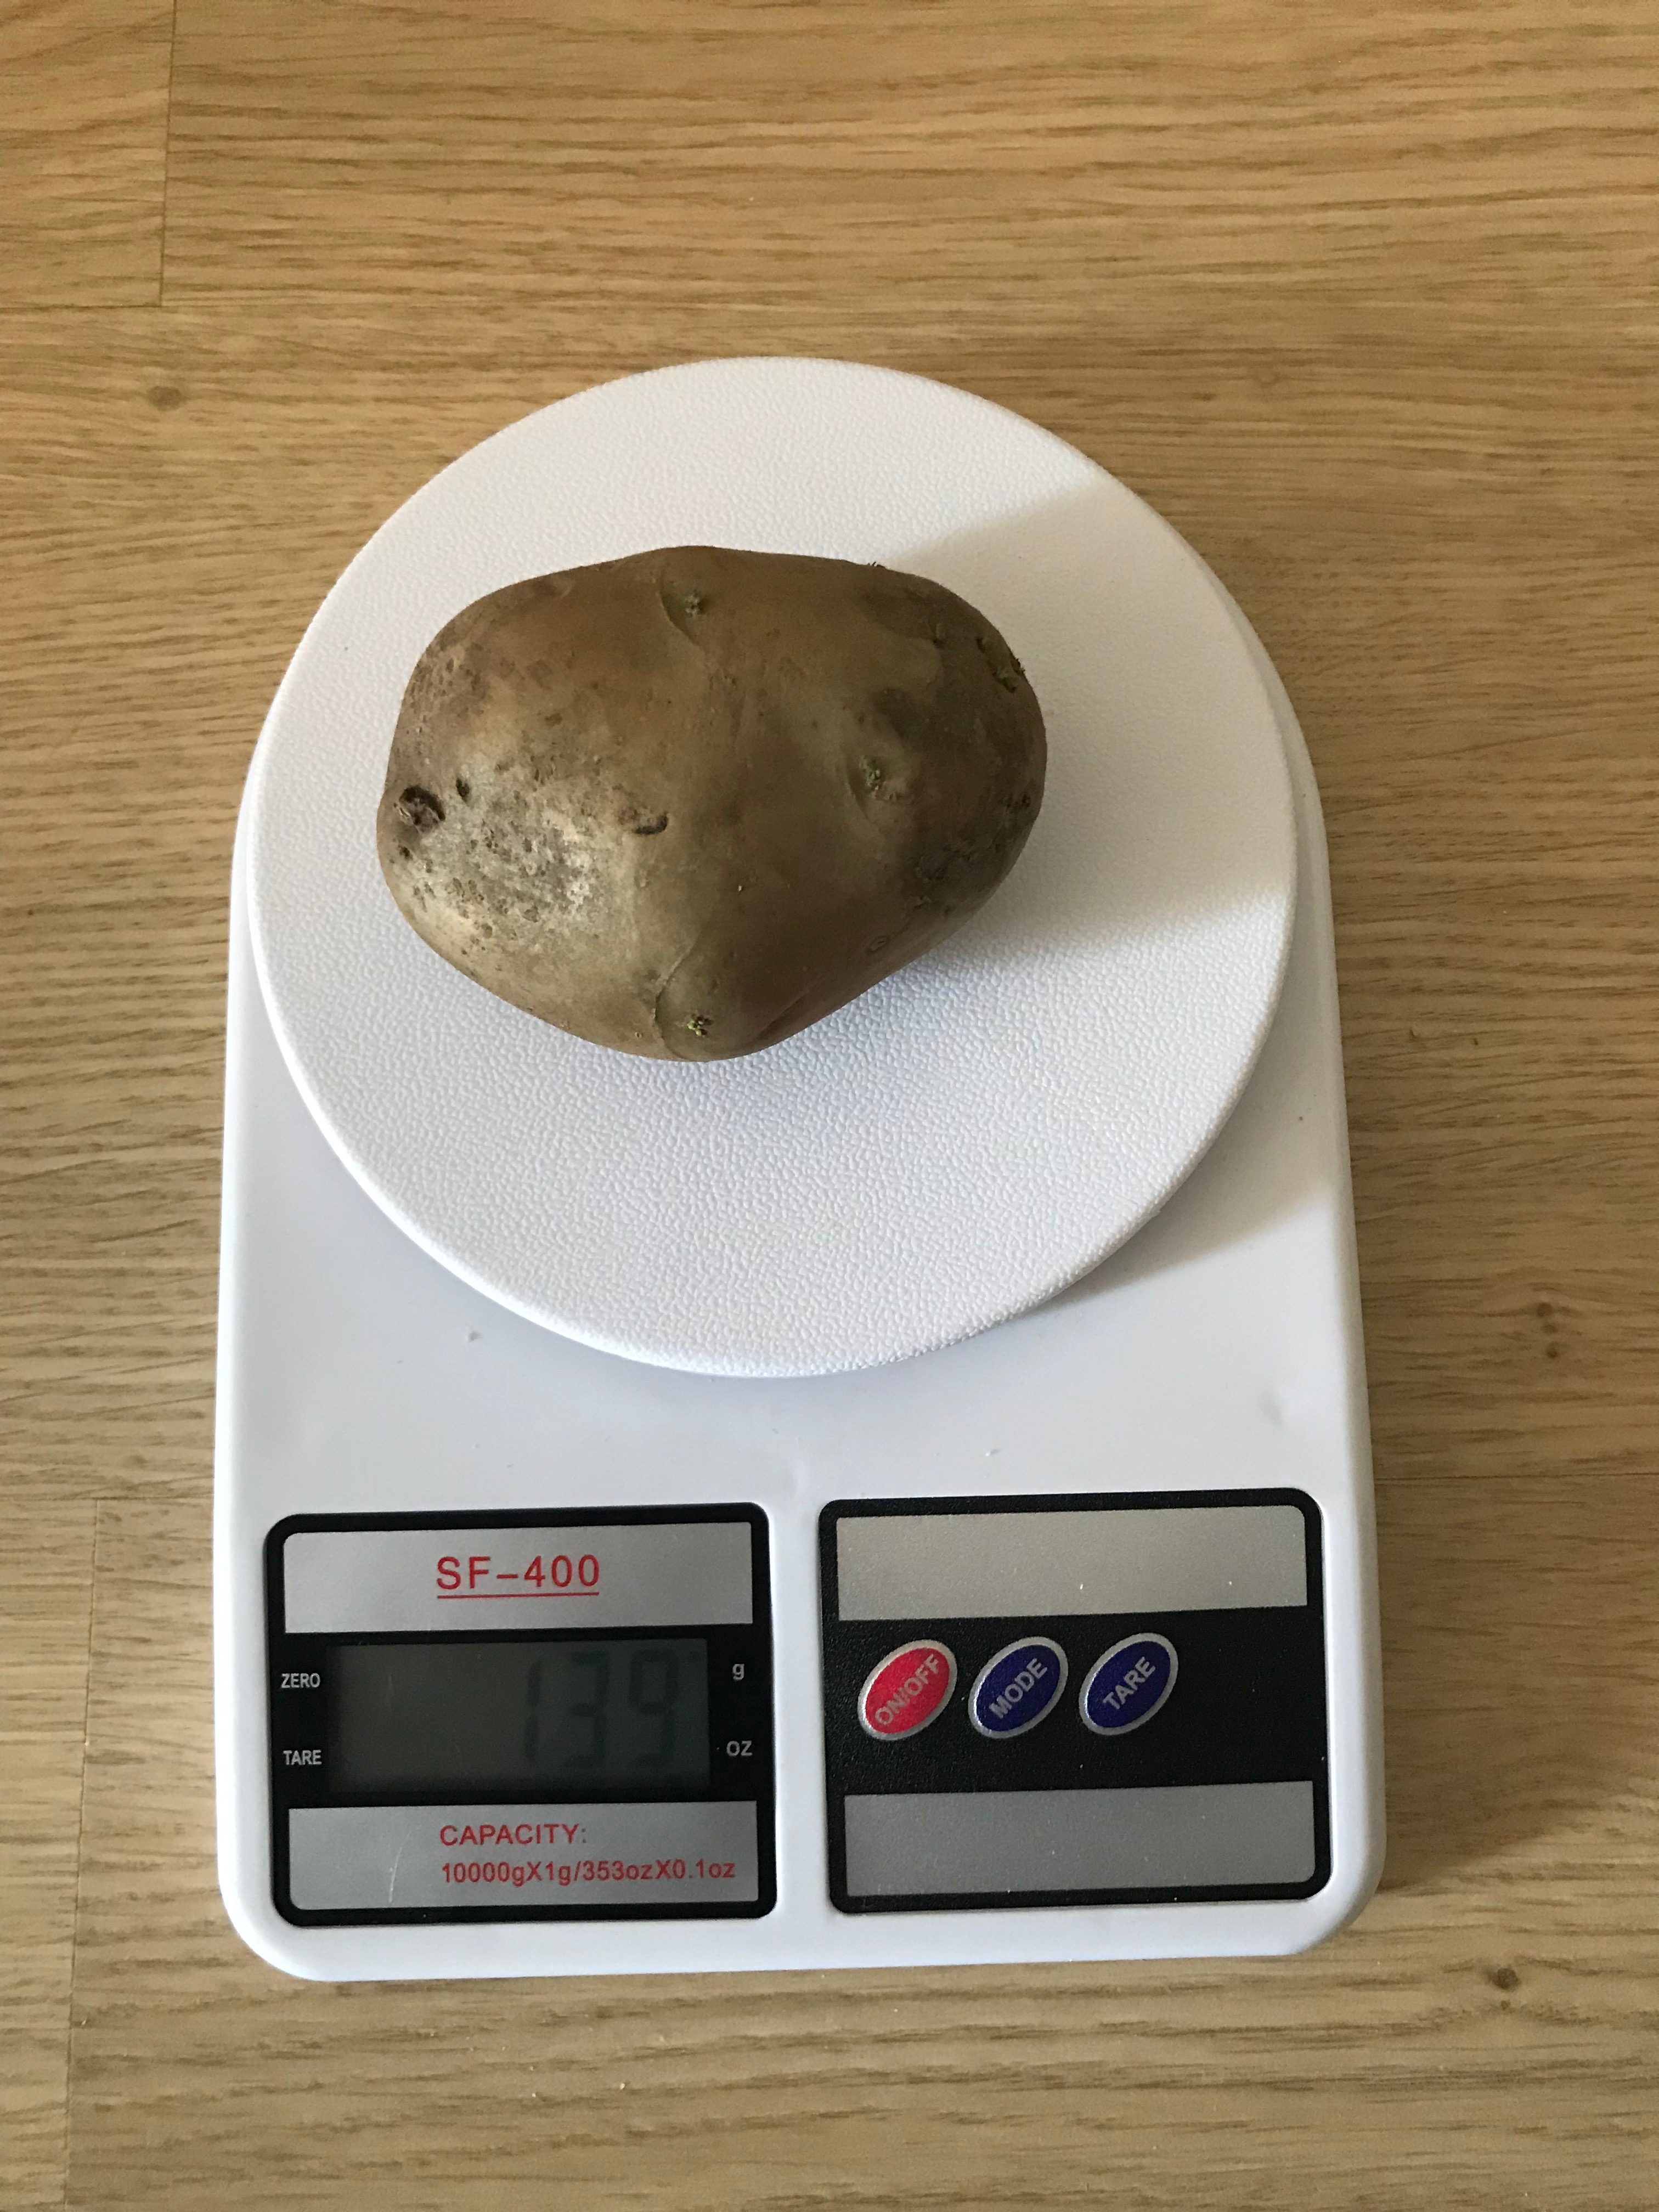 berat 1 buah kentang ukuran sedang